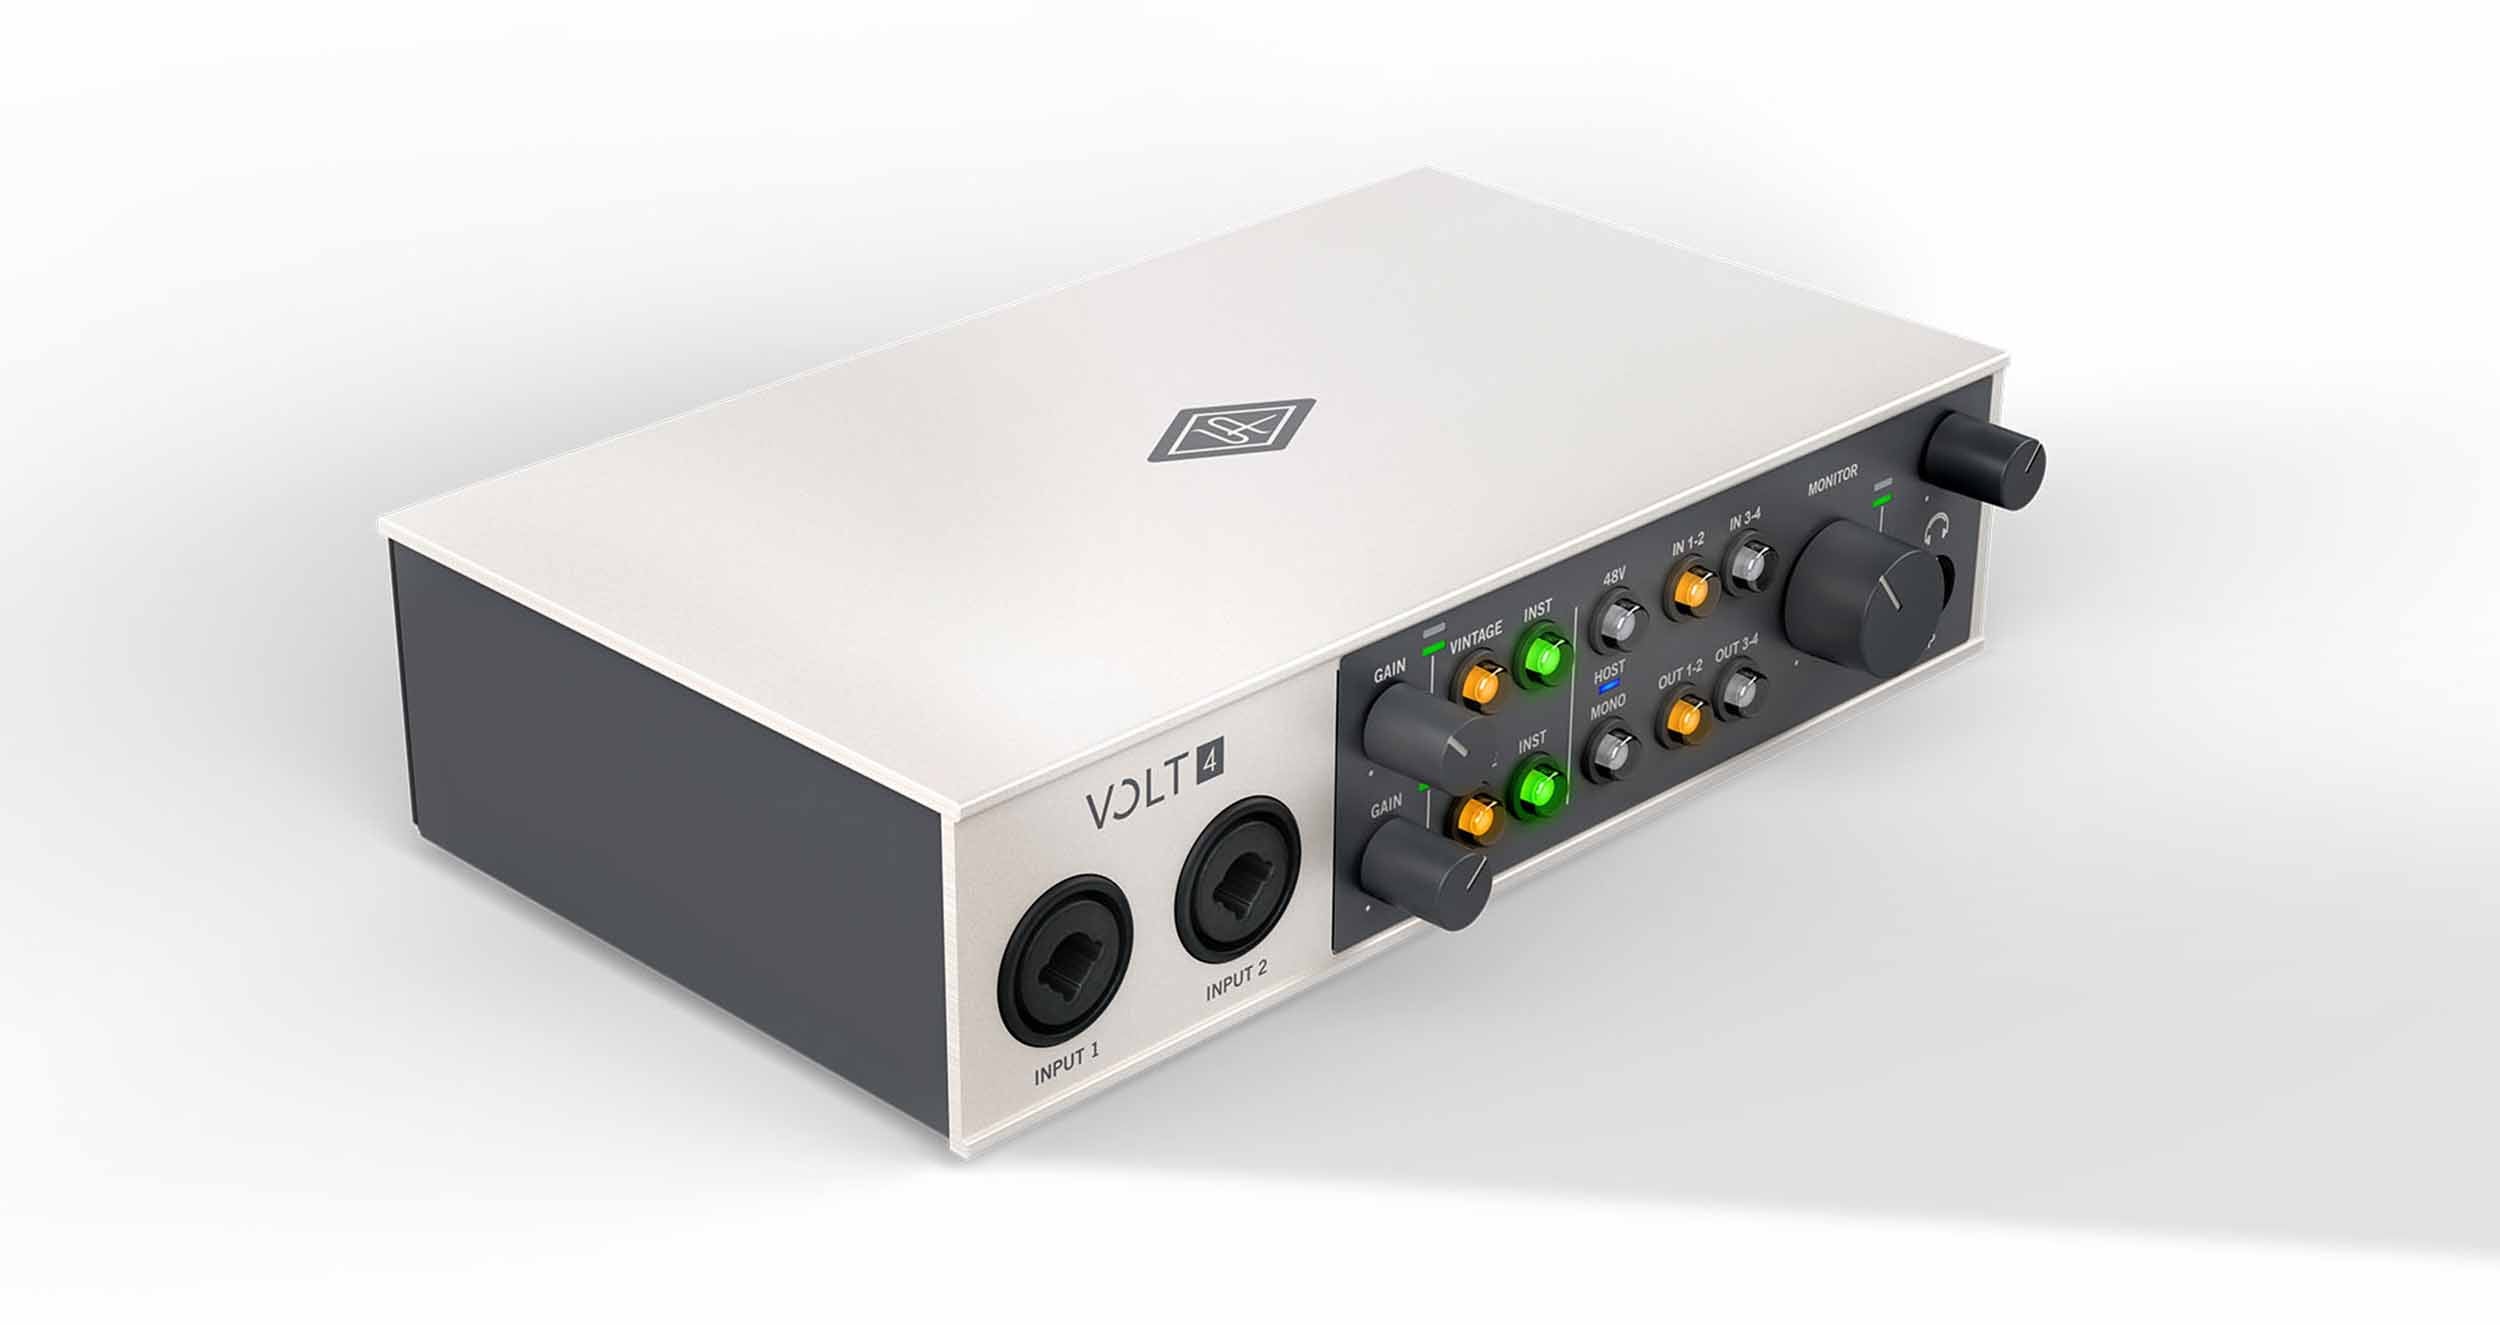 Universal Audio VOLT-4 USB Audio Interface - Hollywood DJ